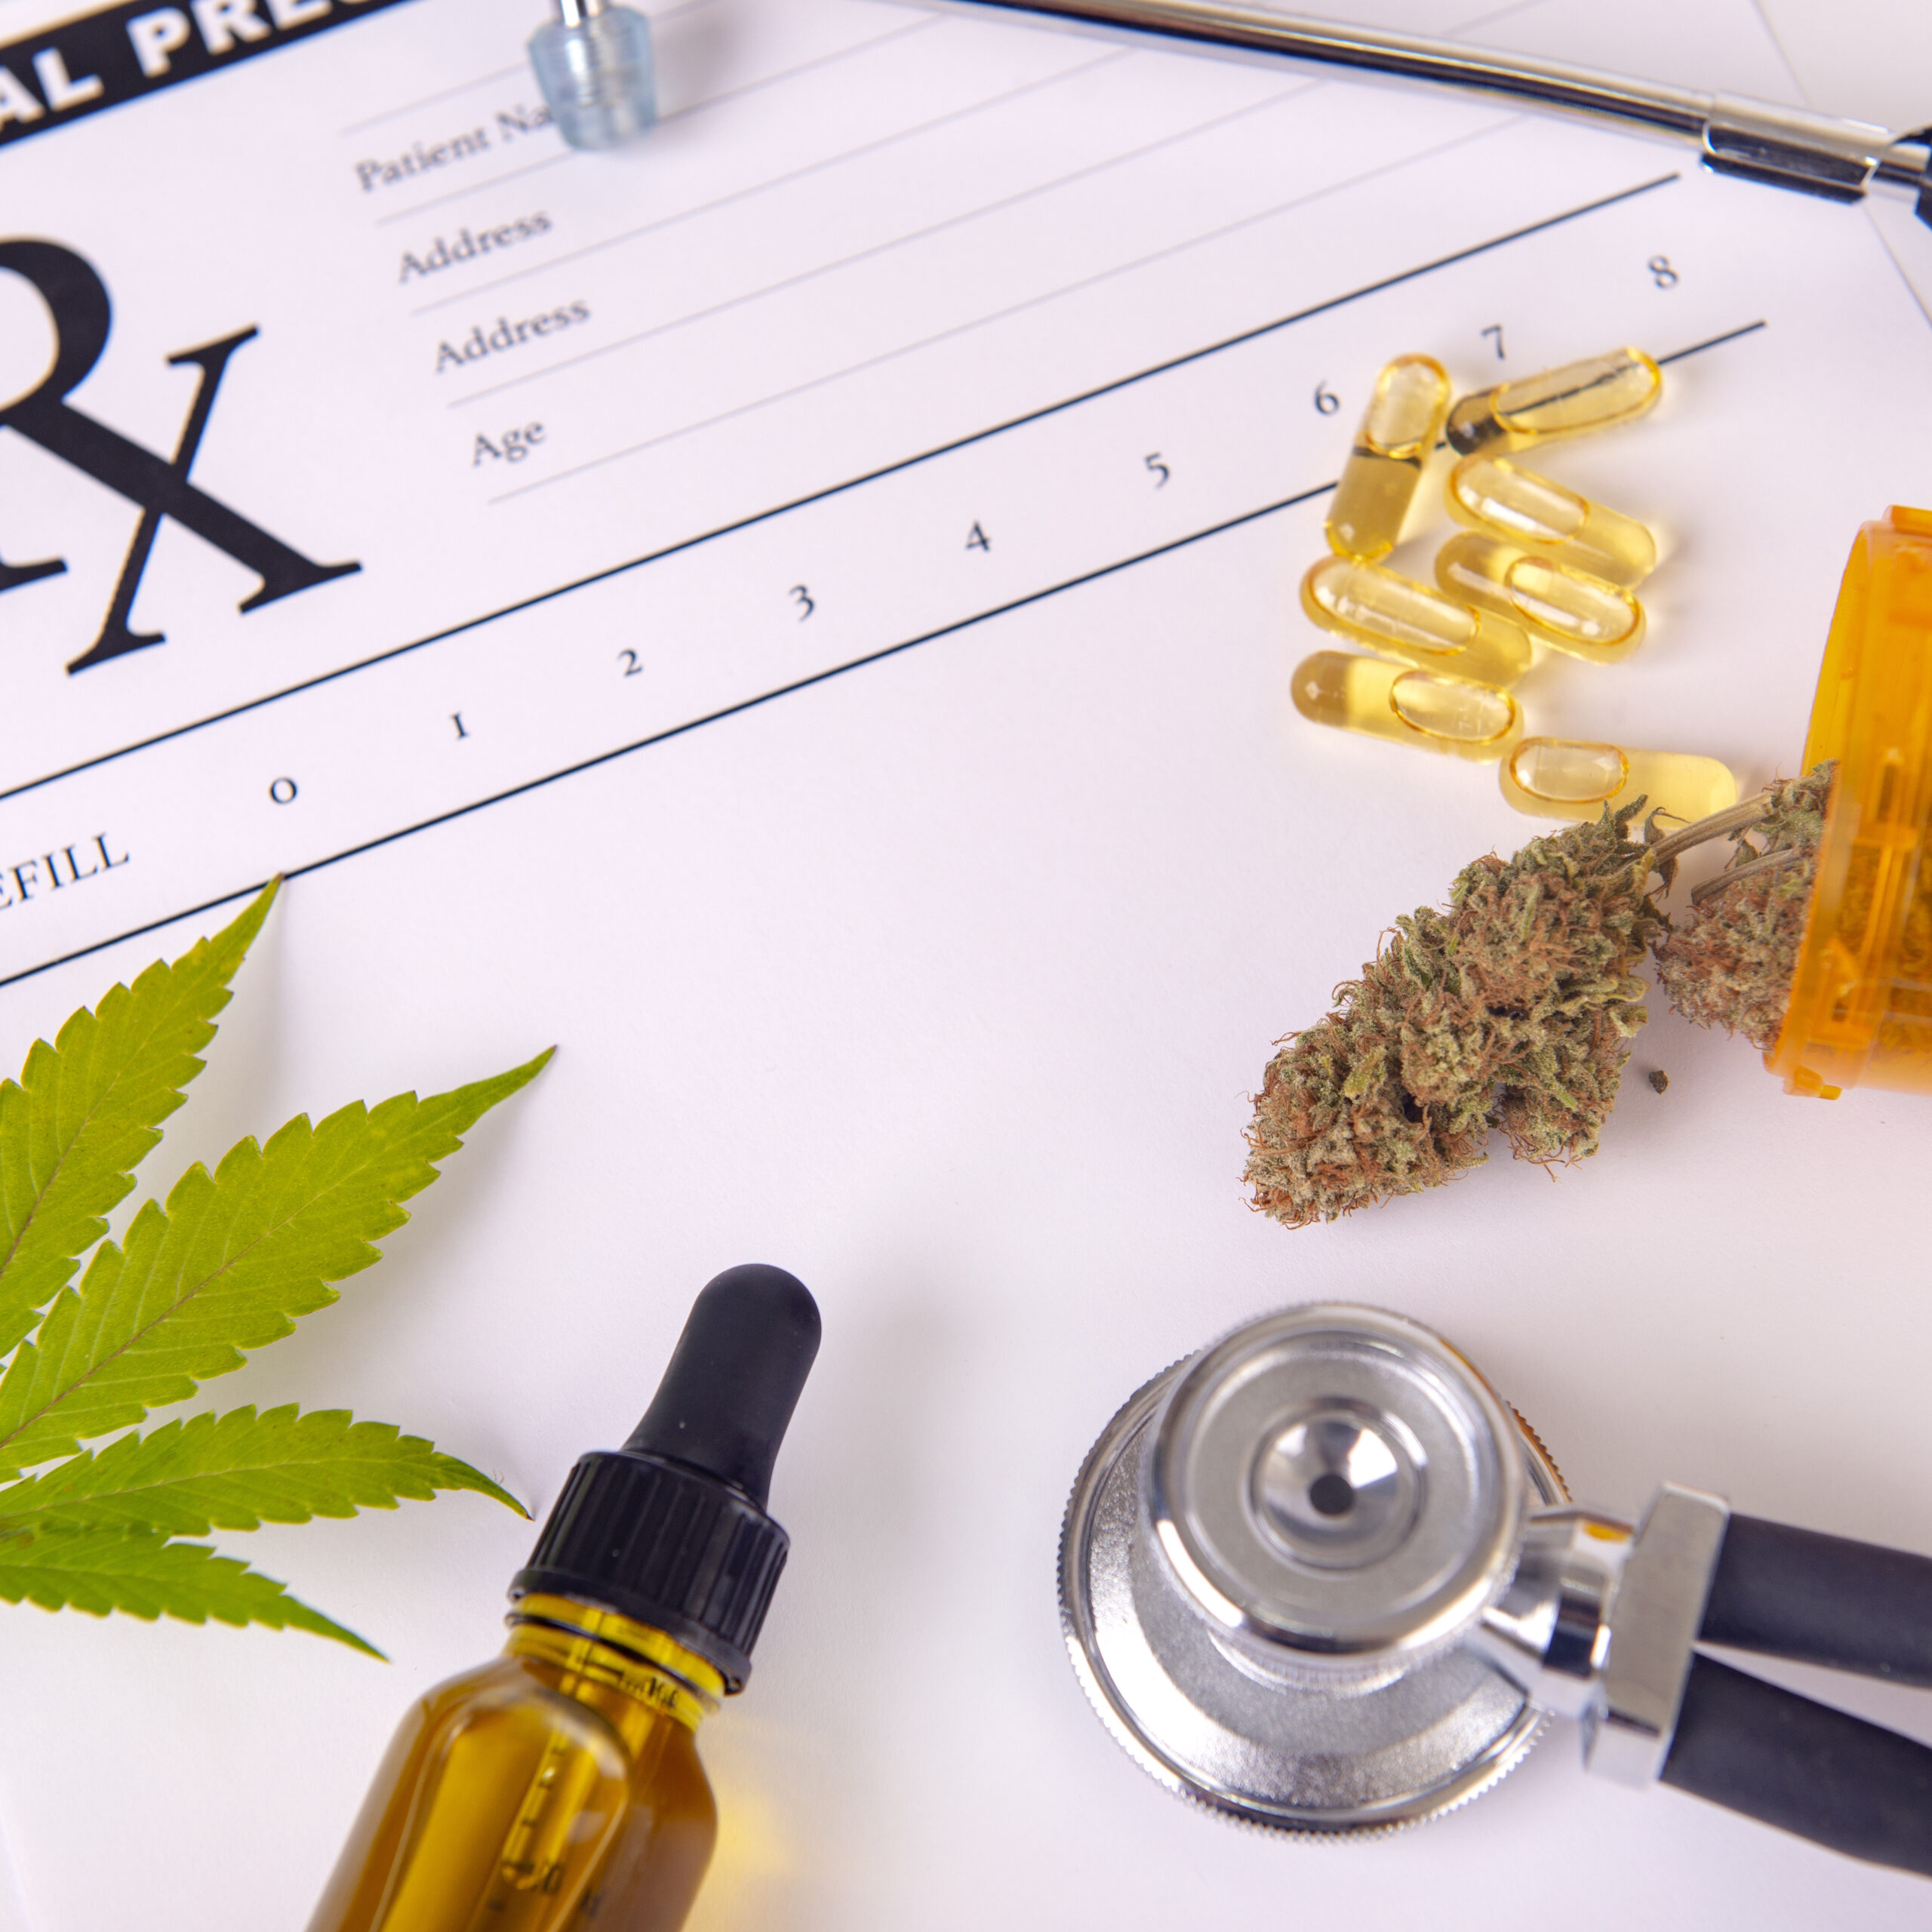 Assorted cannabis products, pills and cbd oil over medical prescription sheet - medical marijuana concept